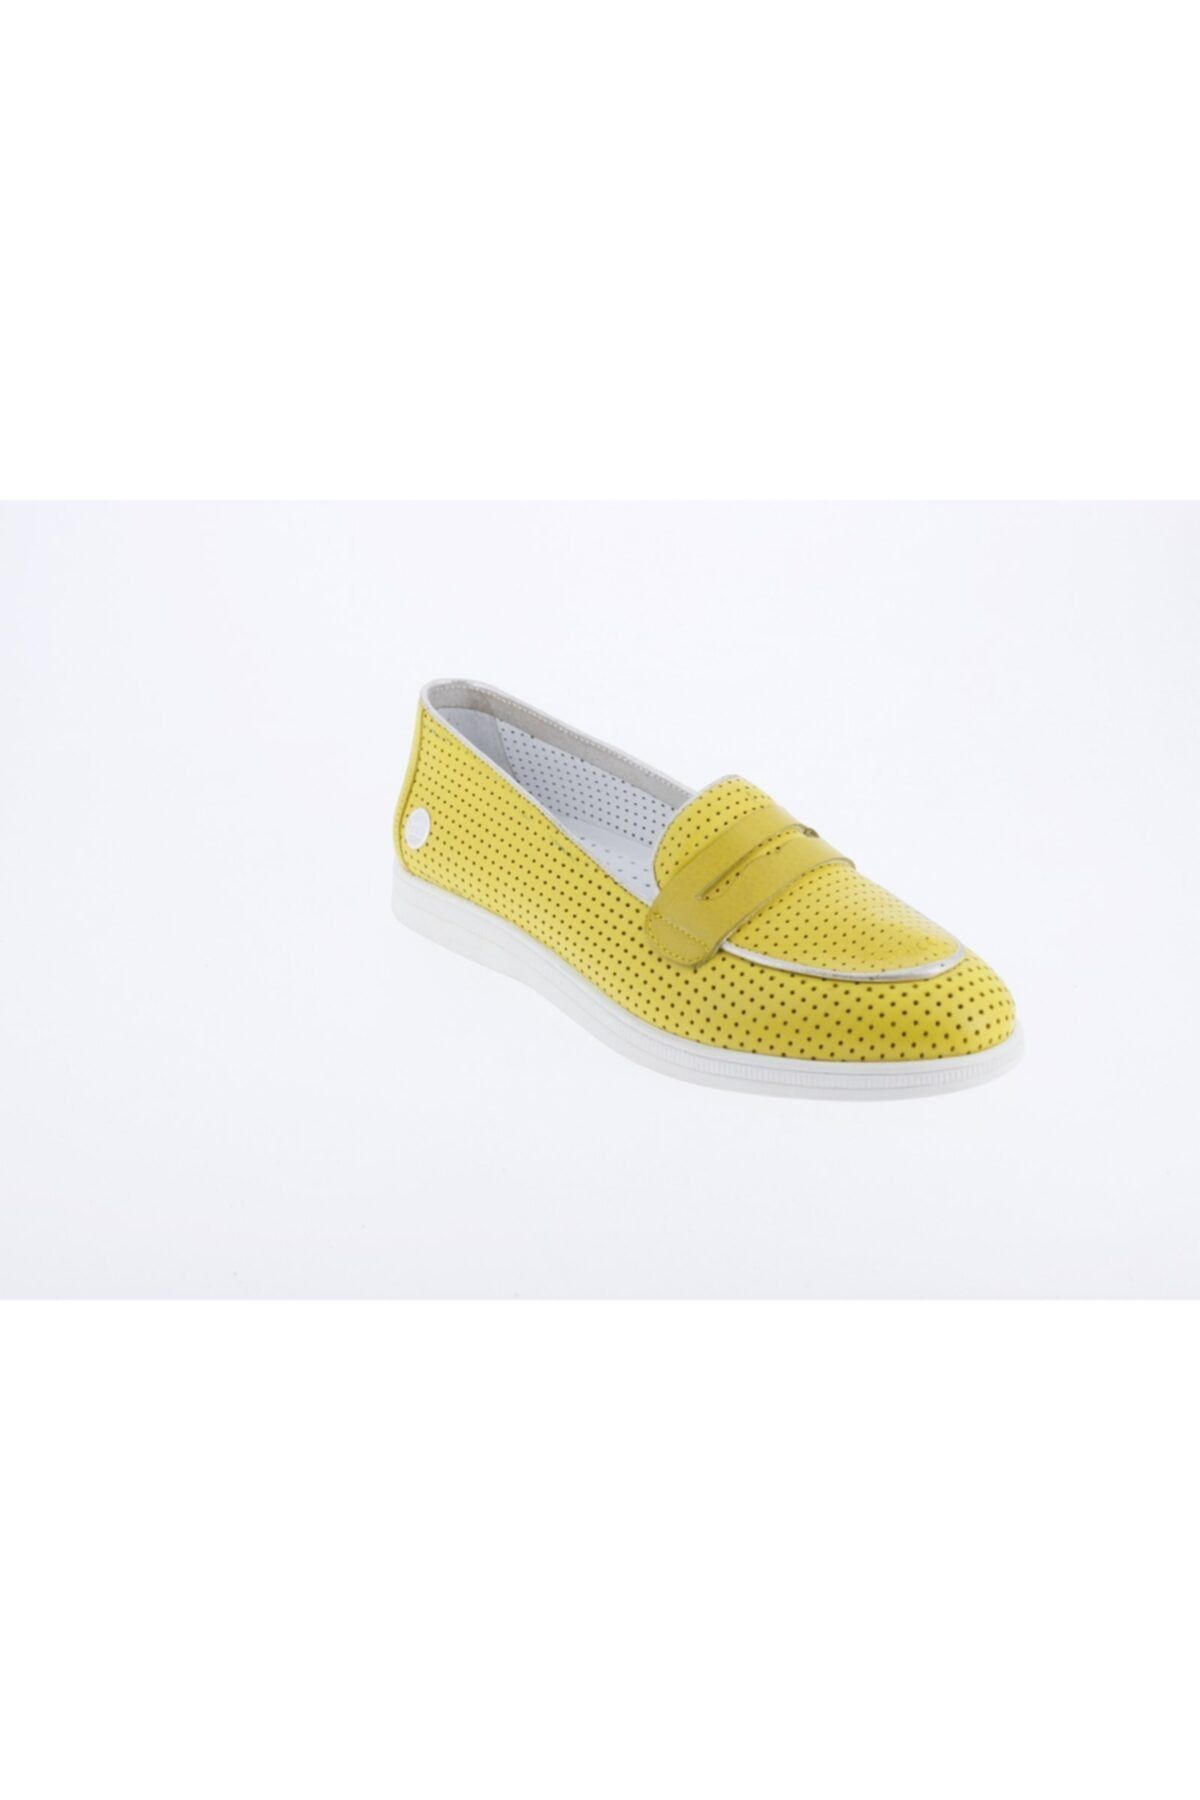 Mammamia Kadın Sarı Spor Ayakkabı D20ya-825-b